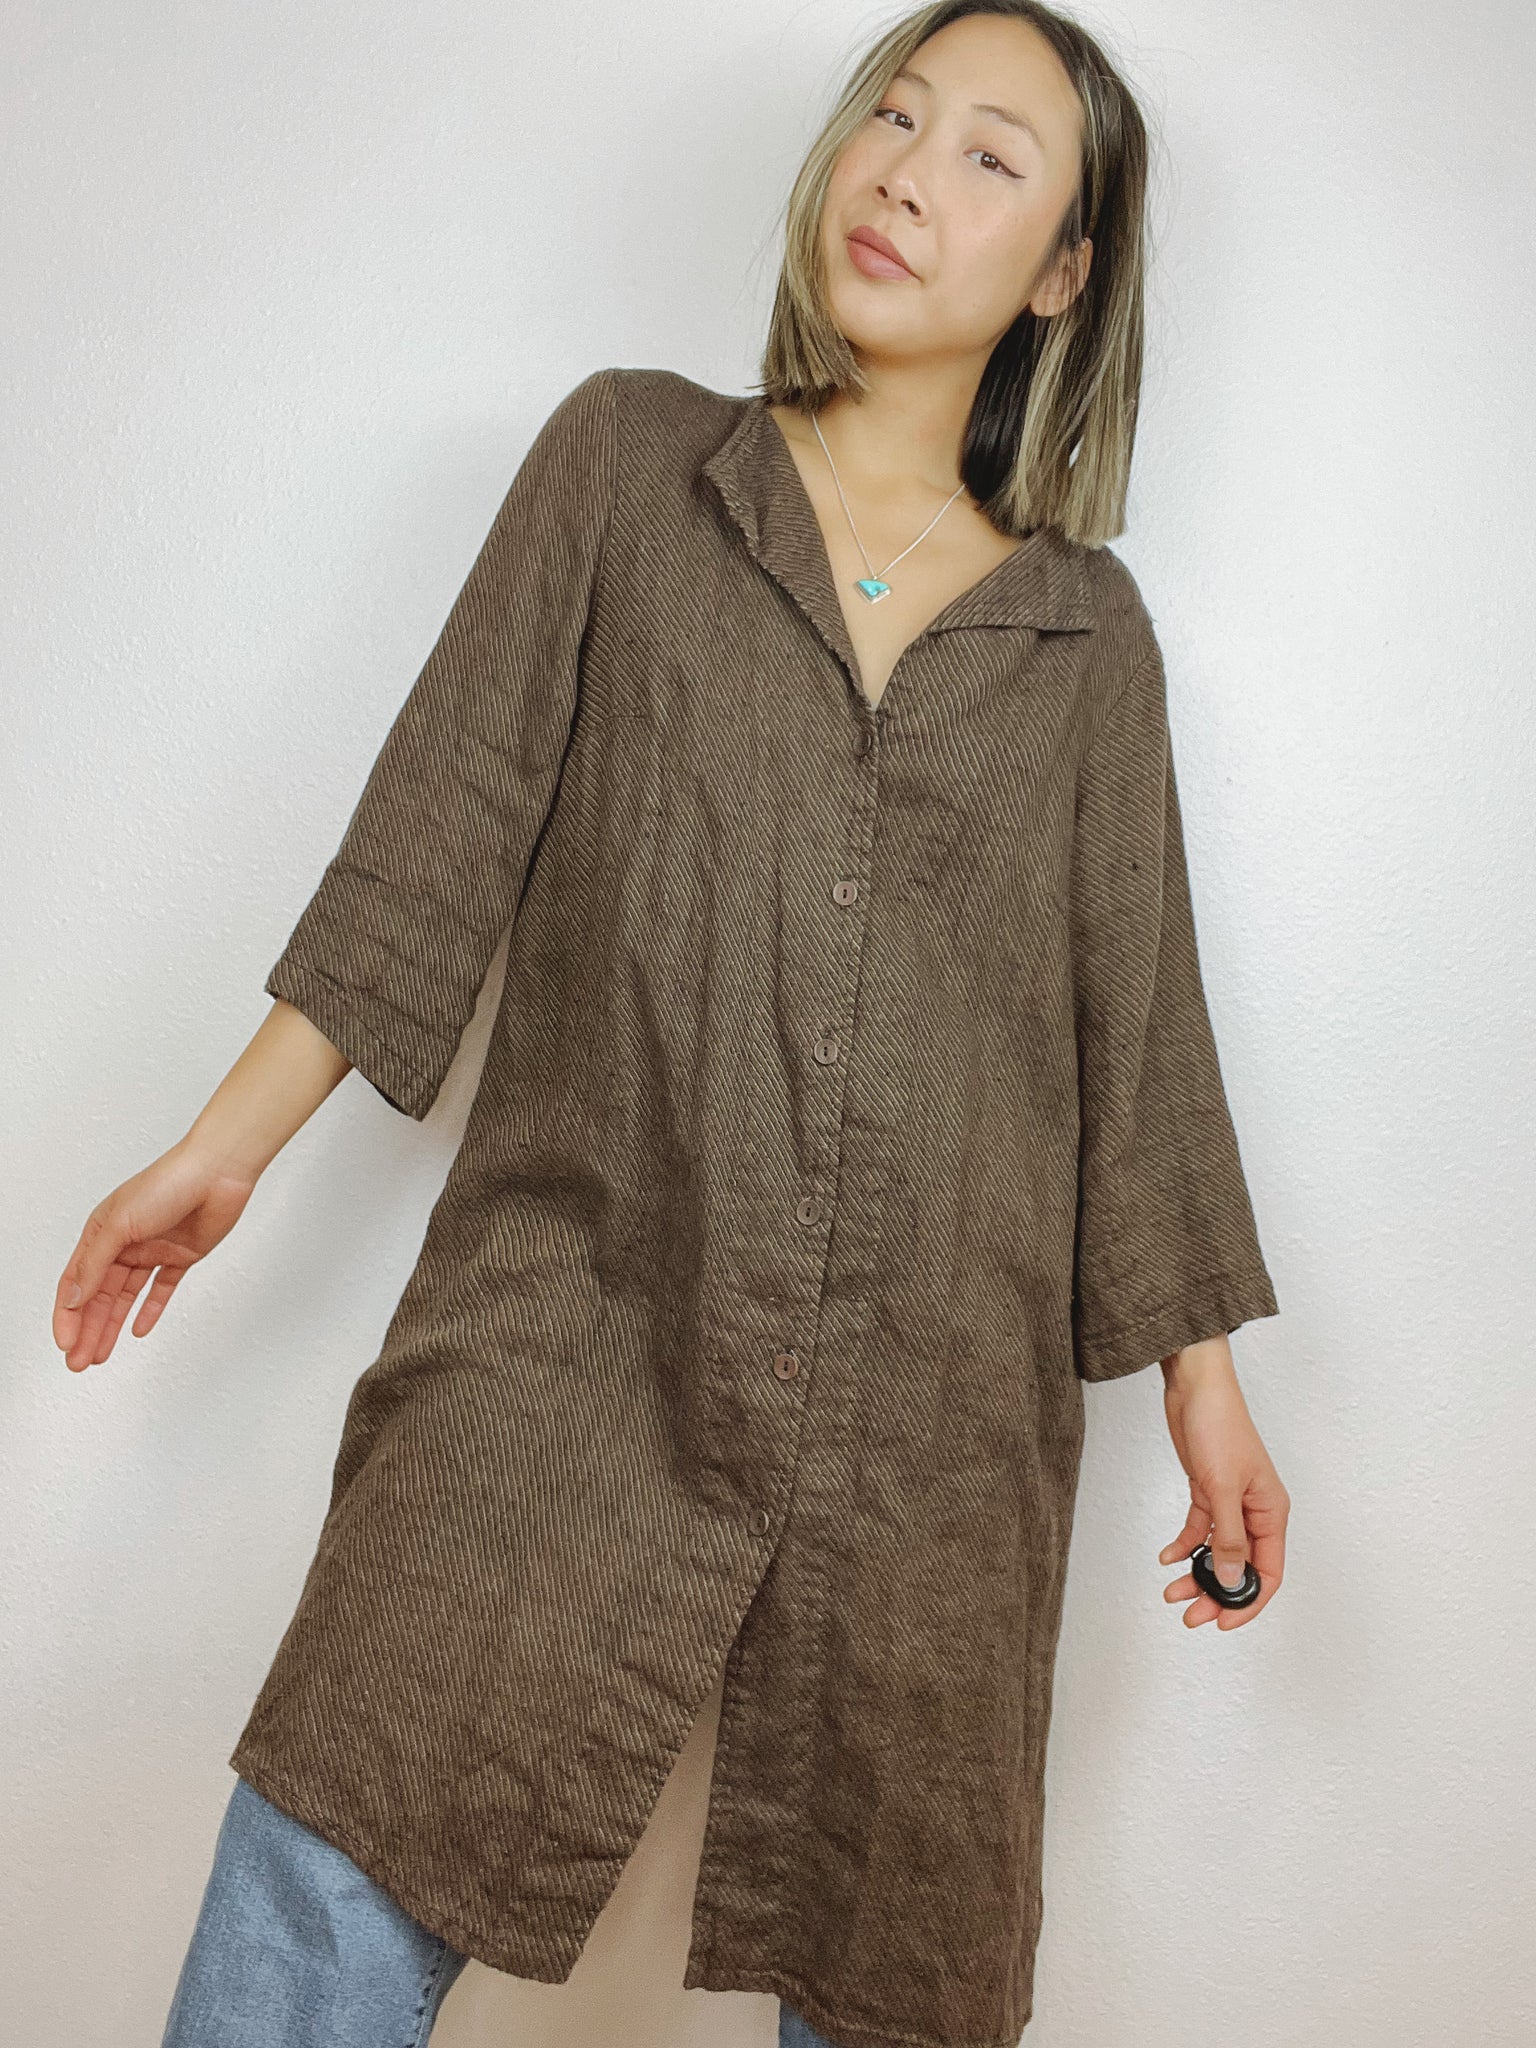 SALE Flax 100% Linen Button Up Duster/Dress